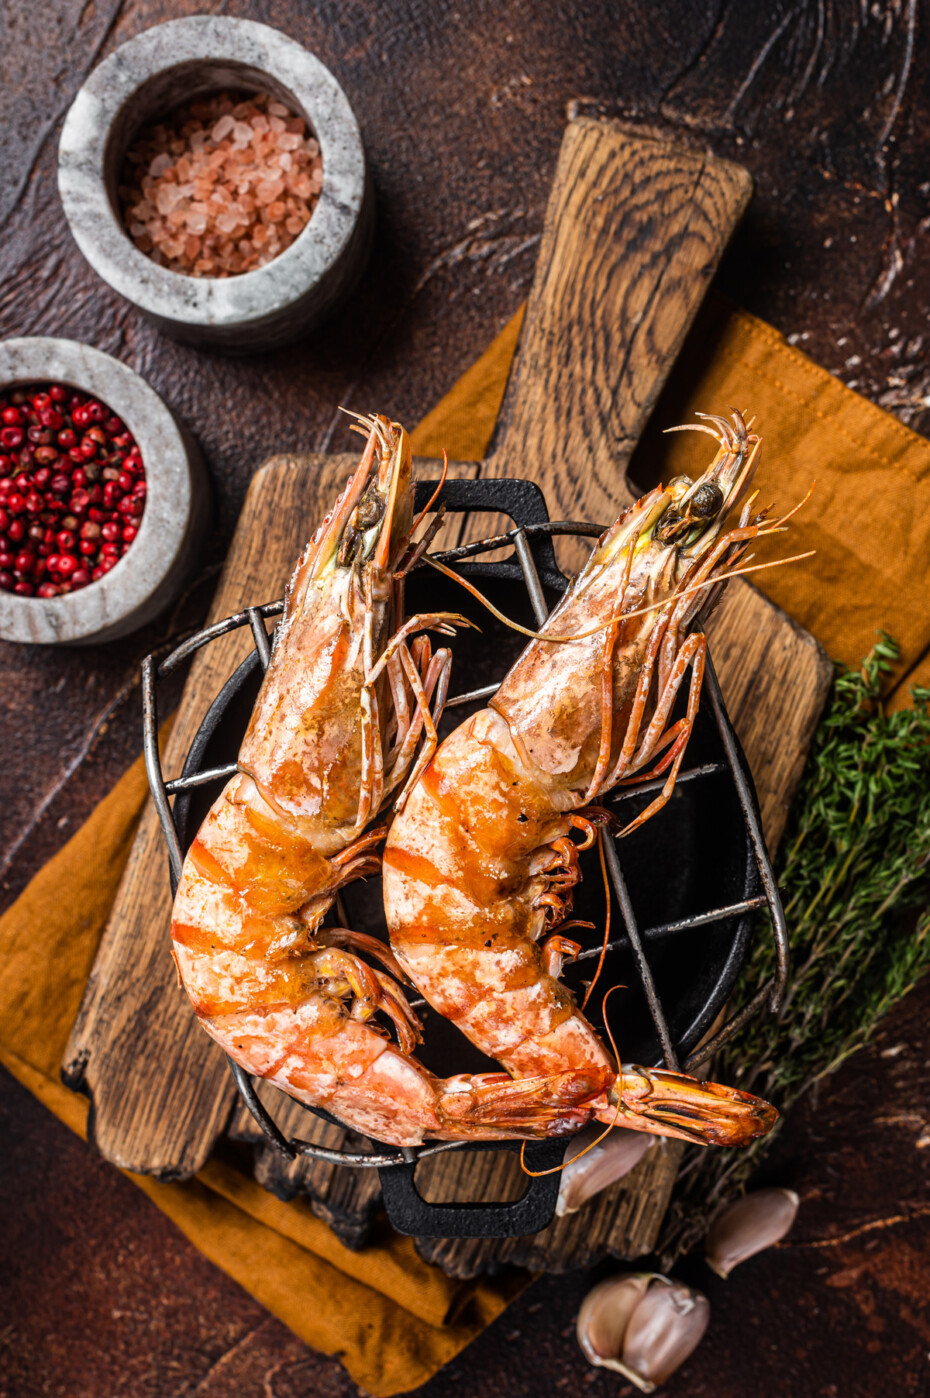 How to Reheat Shrimp and Keep Them Juicy